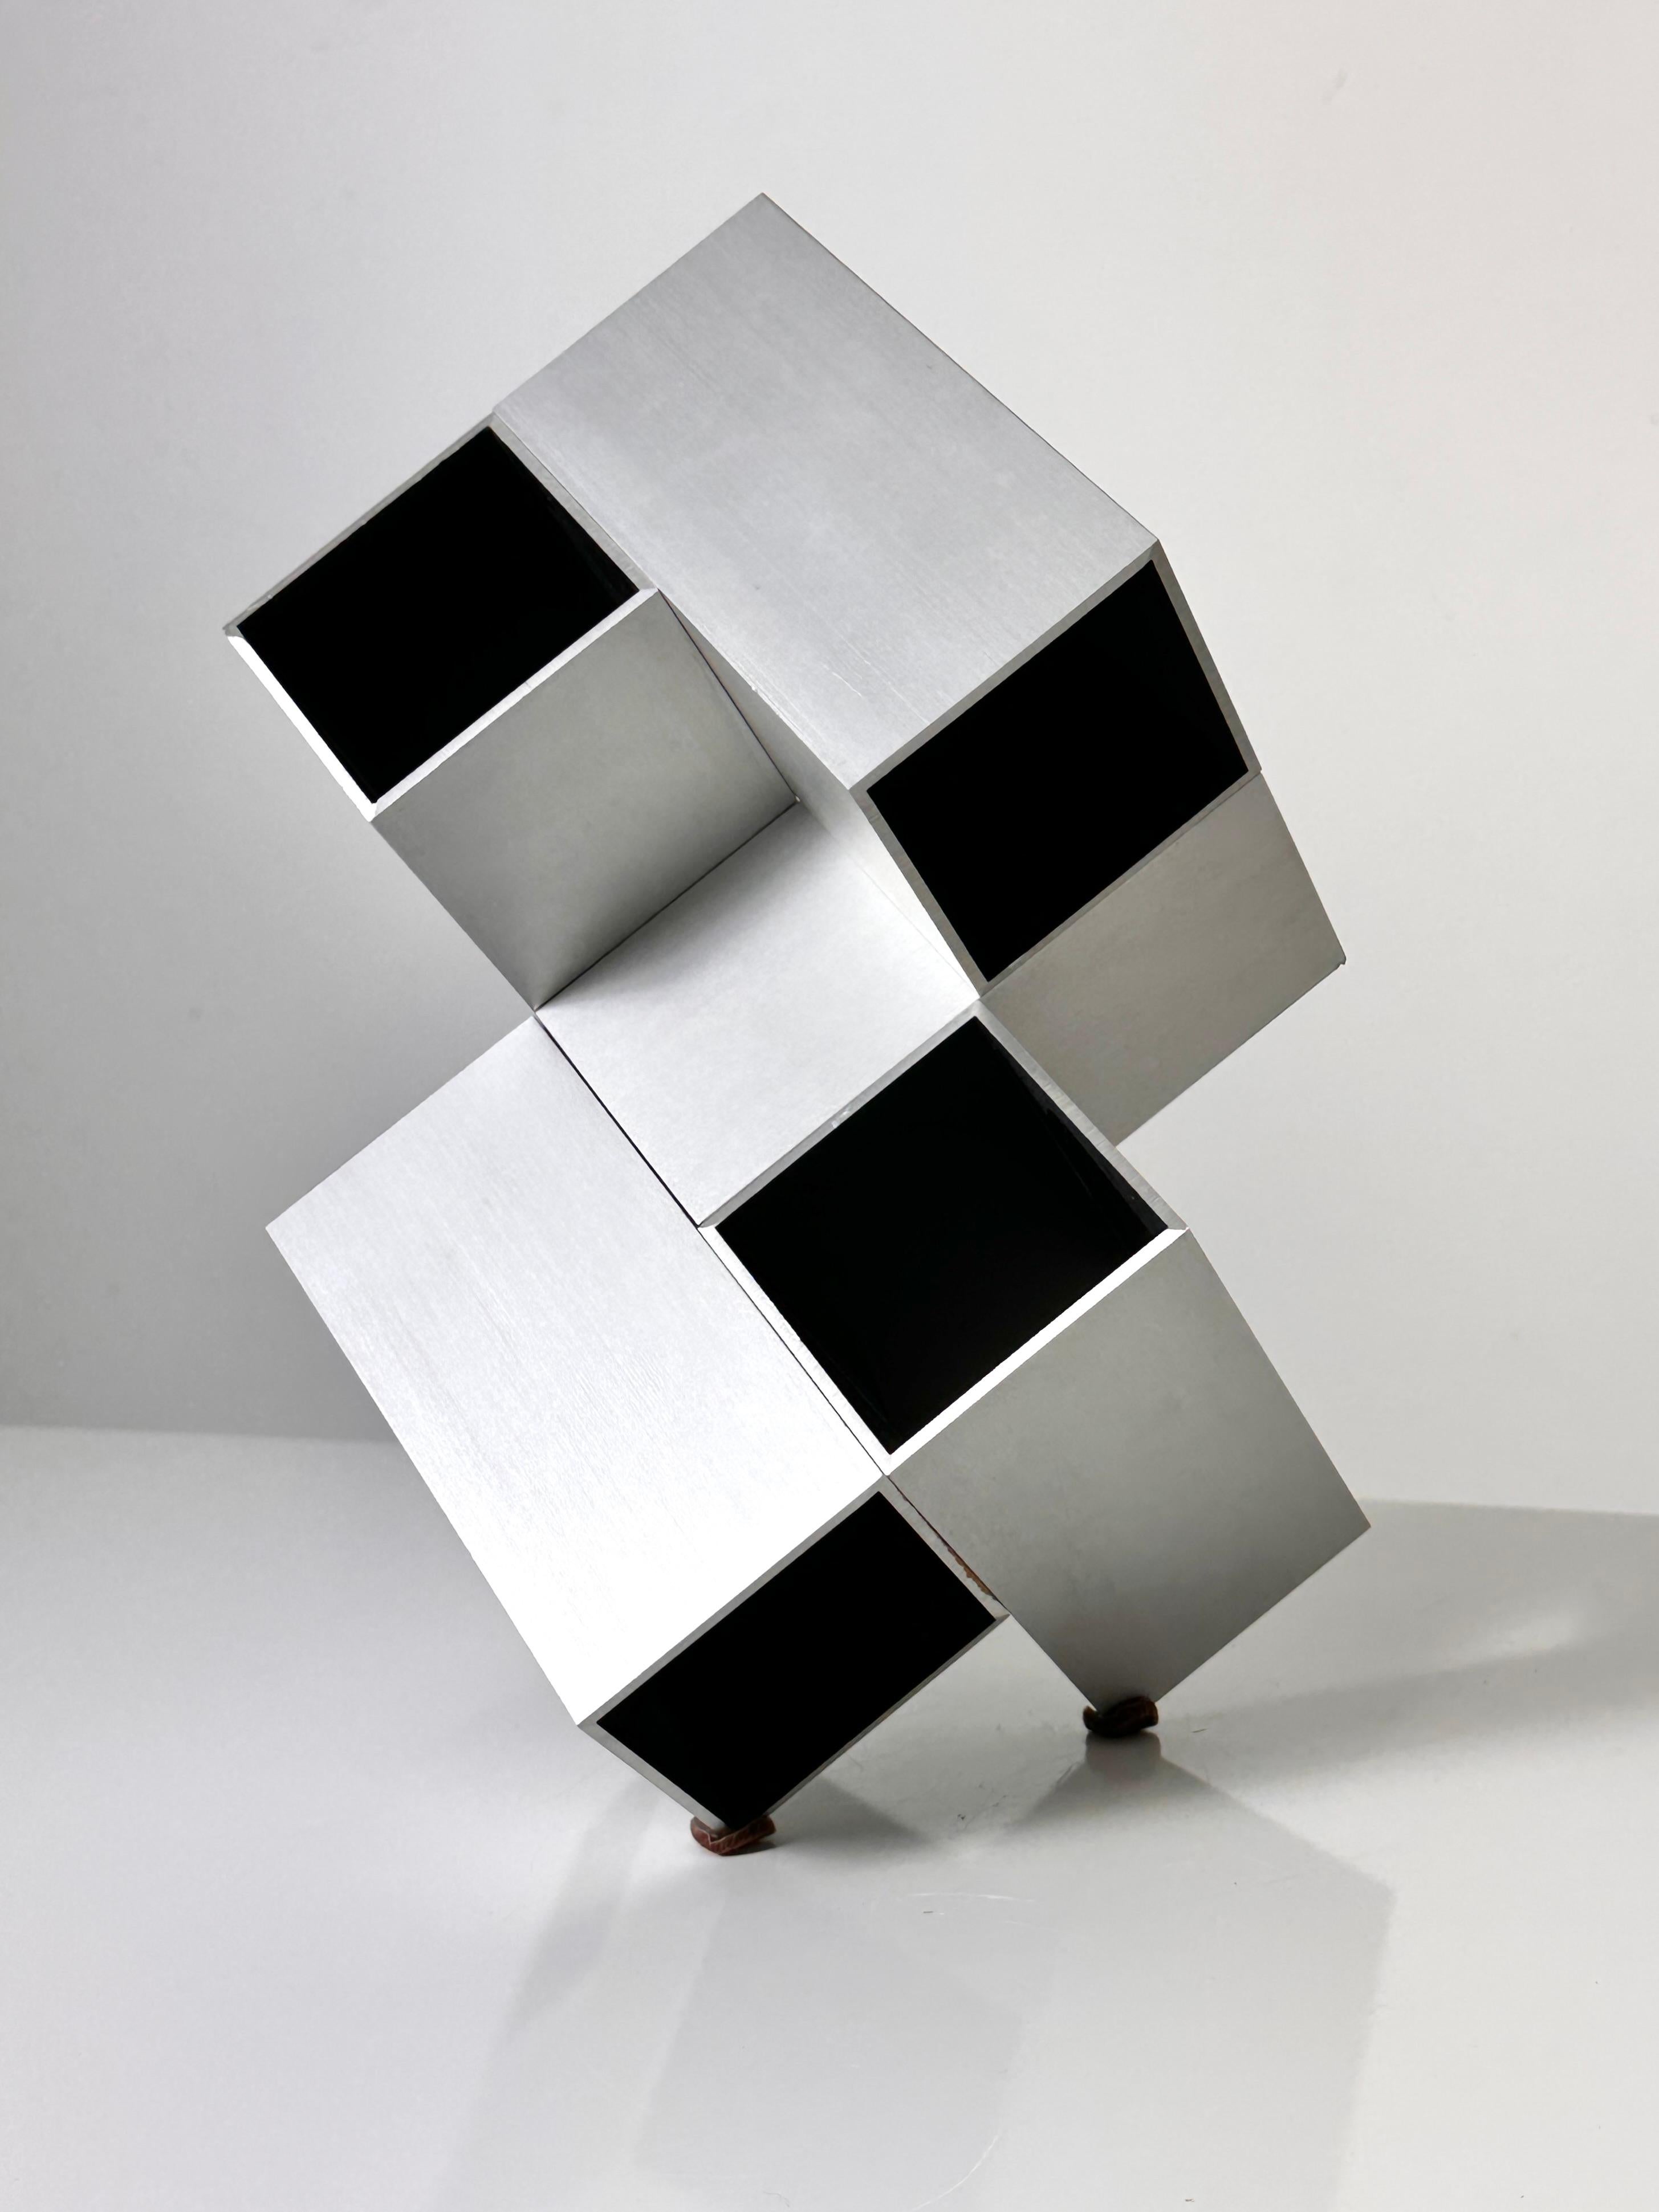 Abstract Modern Modular Aluminum Op Art Cube Sculpture by Kosso Eloul 1970s For Sale 3